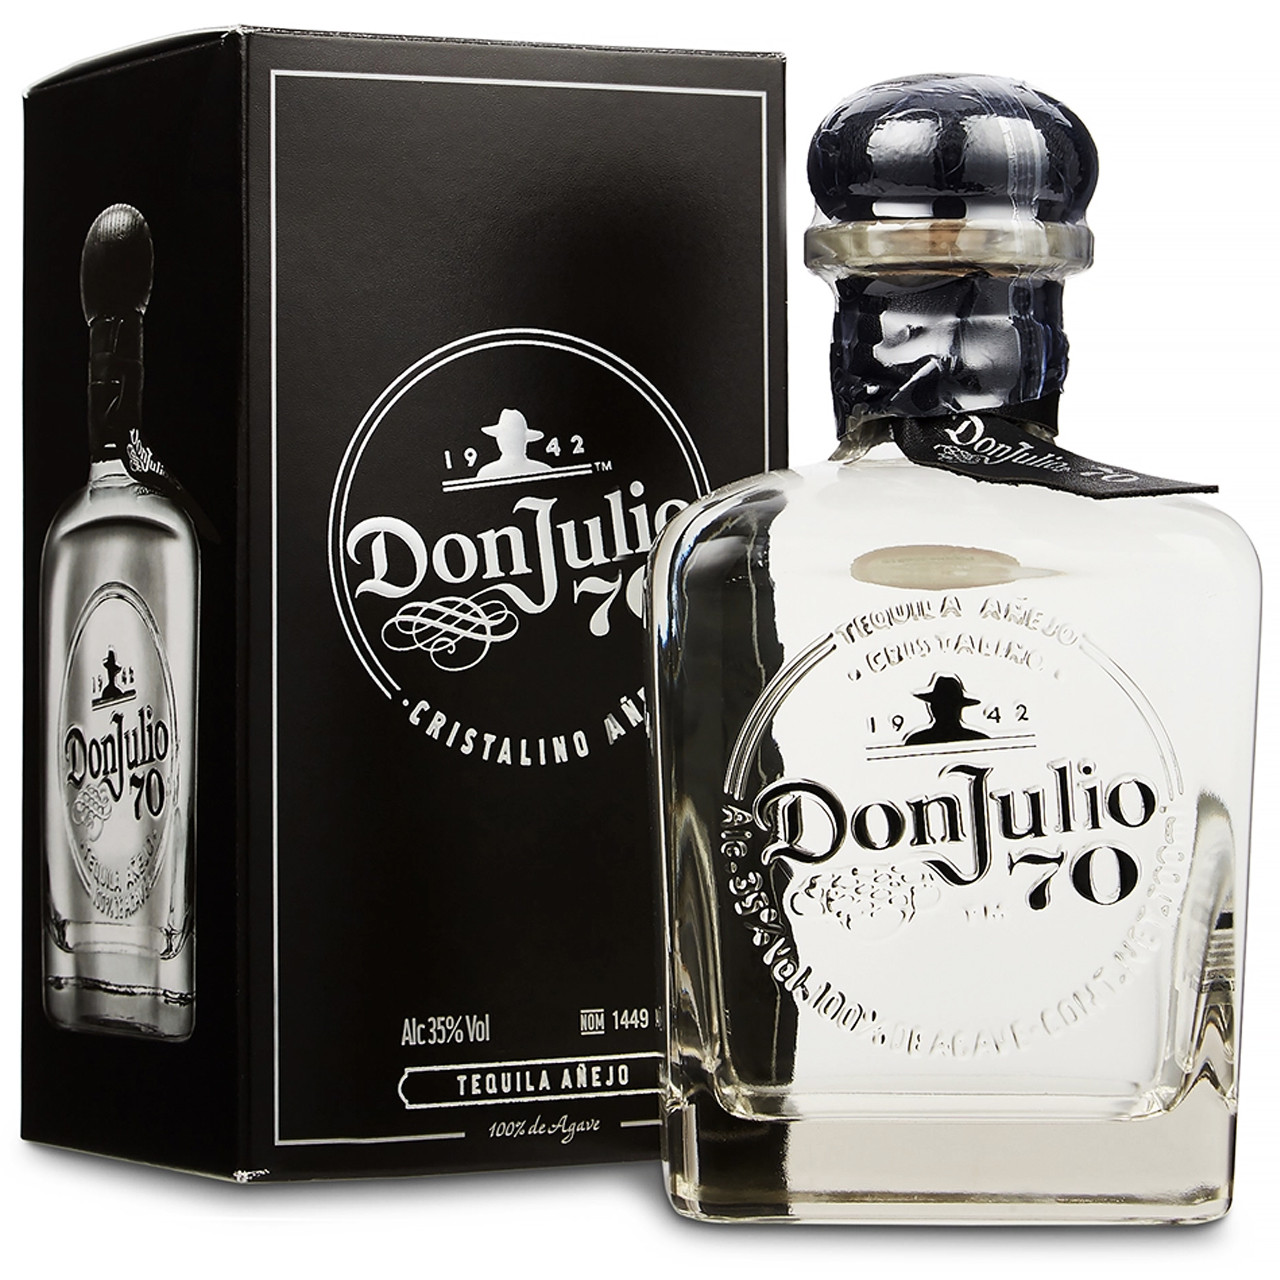 Donjulio 70 - 酒